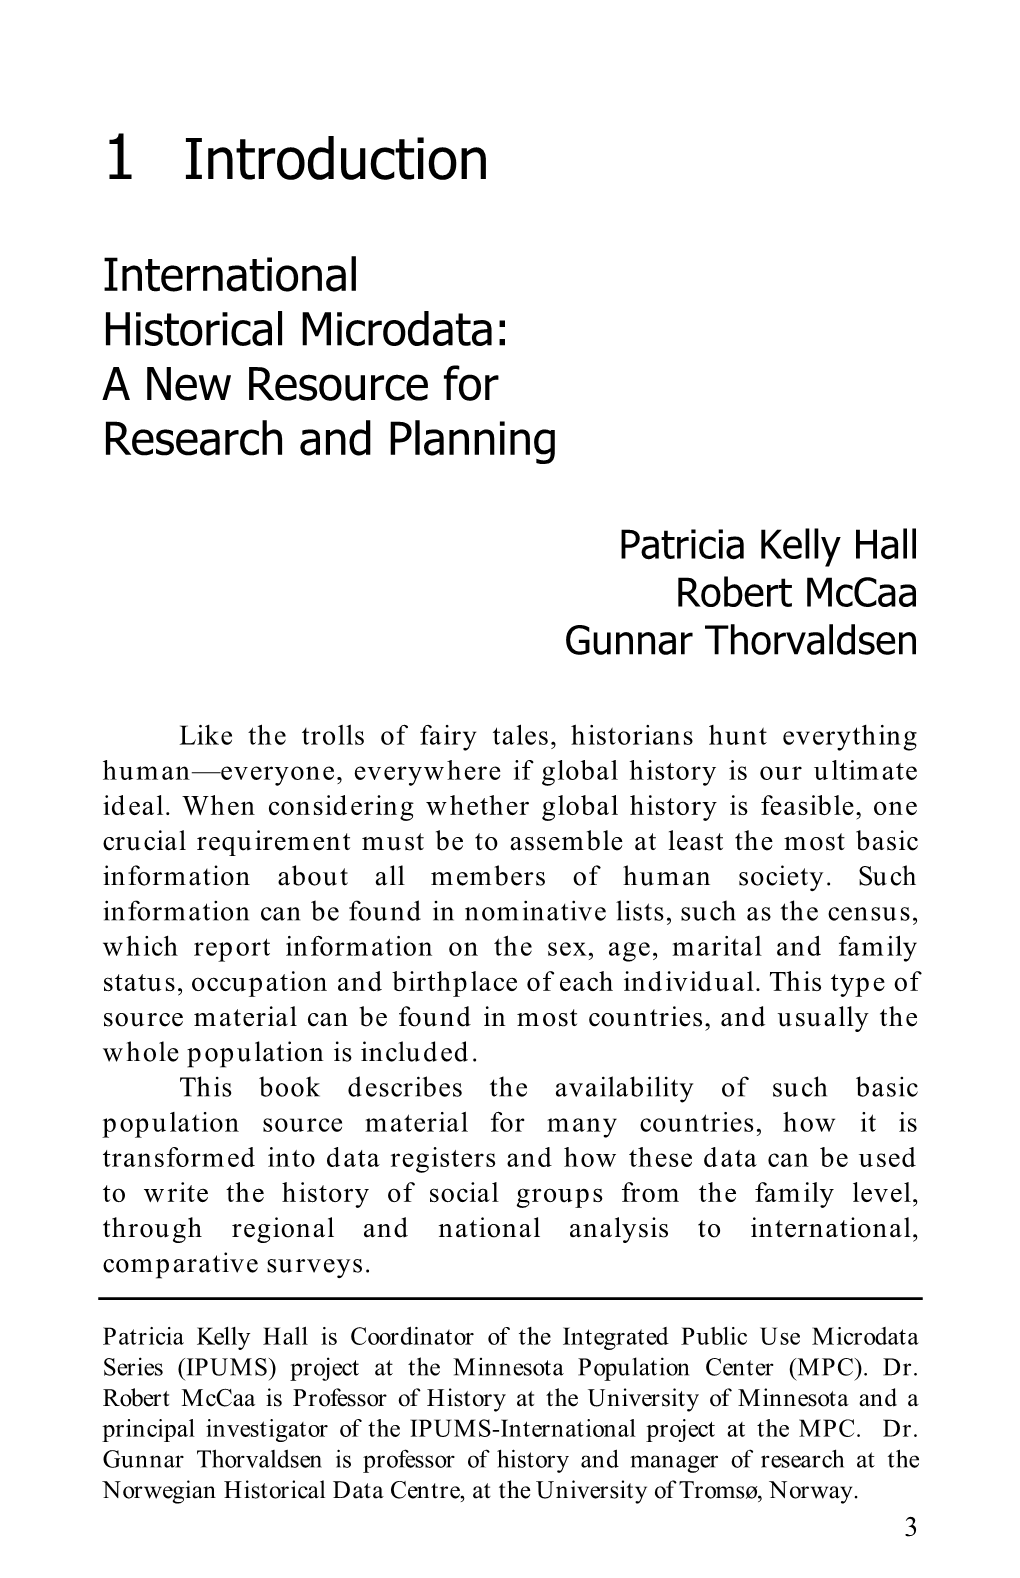 Introduction — International Historical Microdata